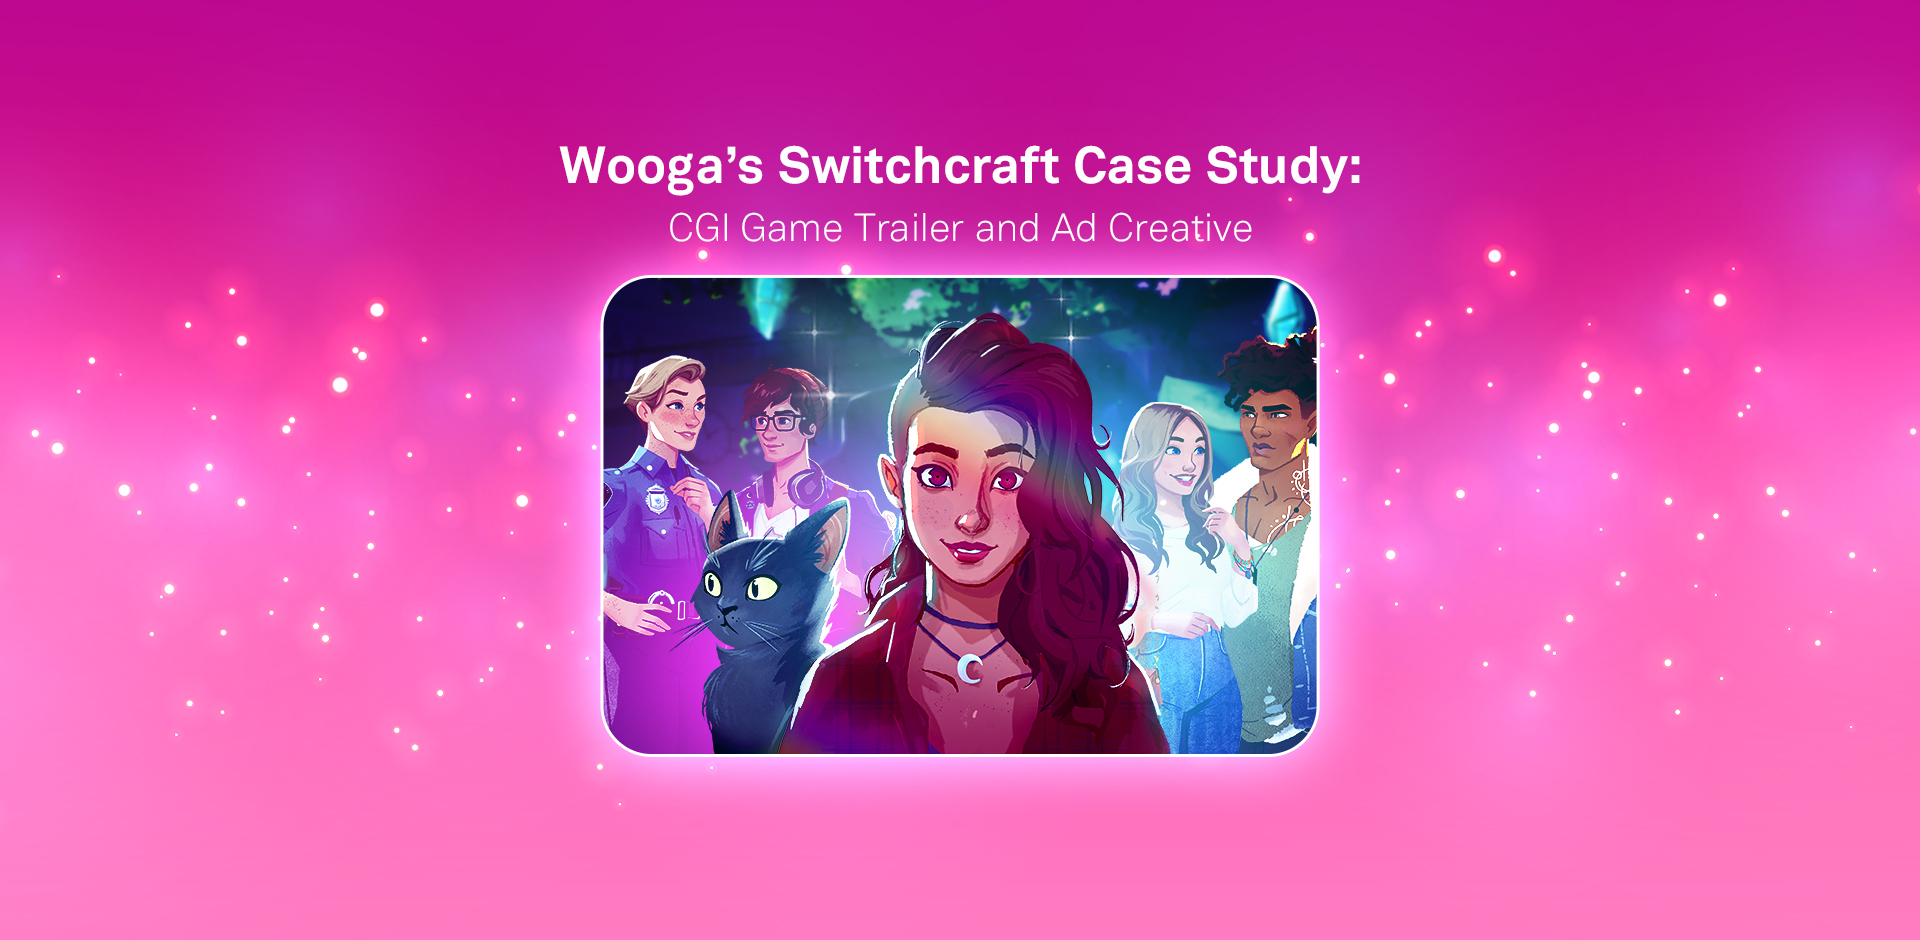 Wooga’s Switchcraft Case Study